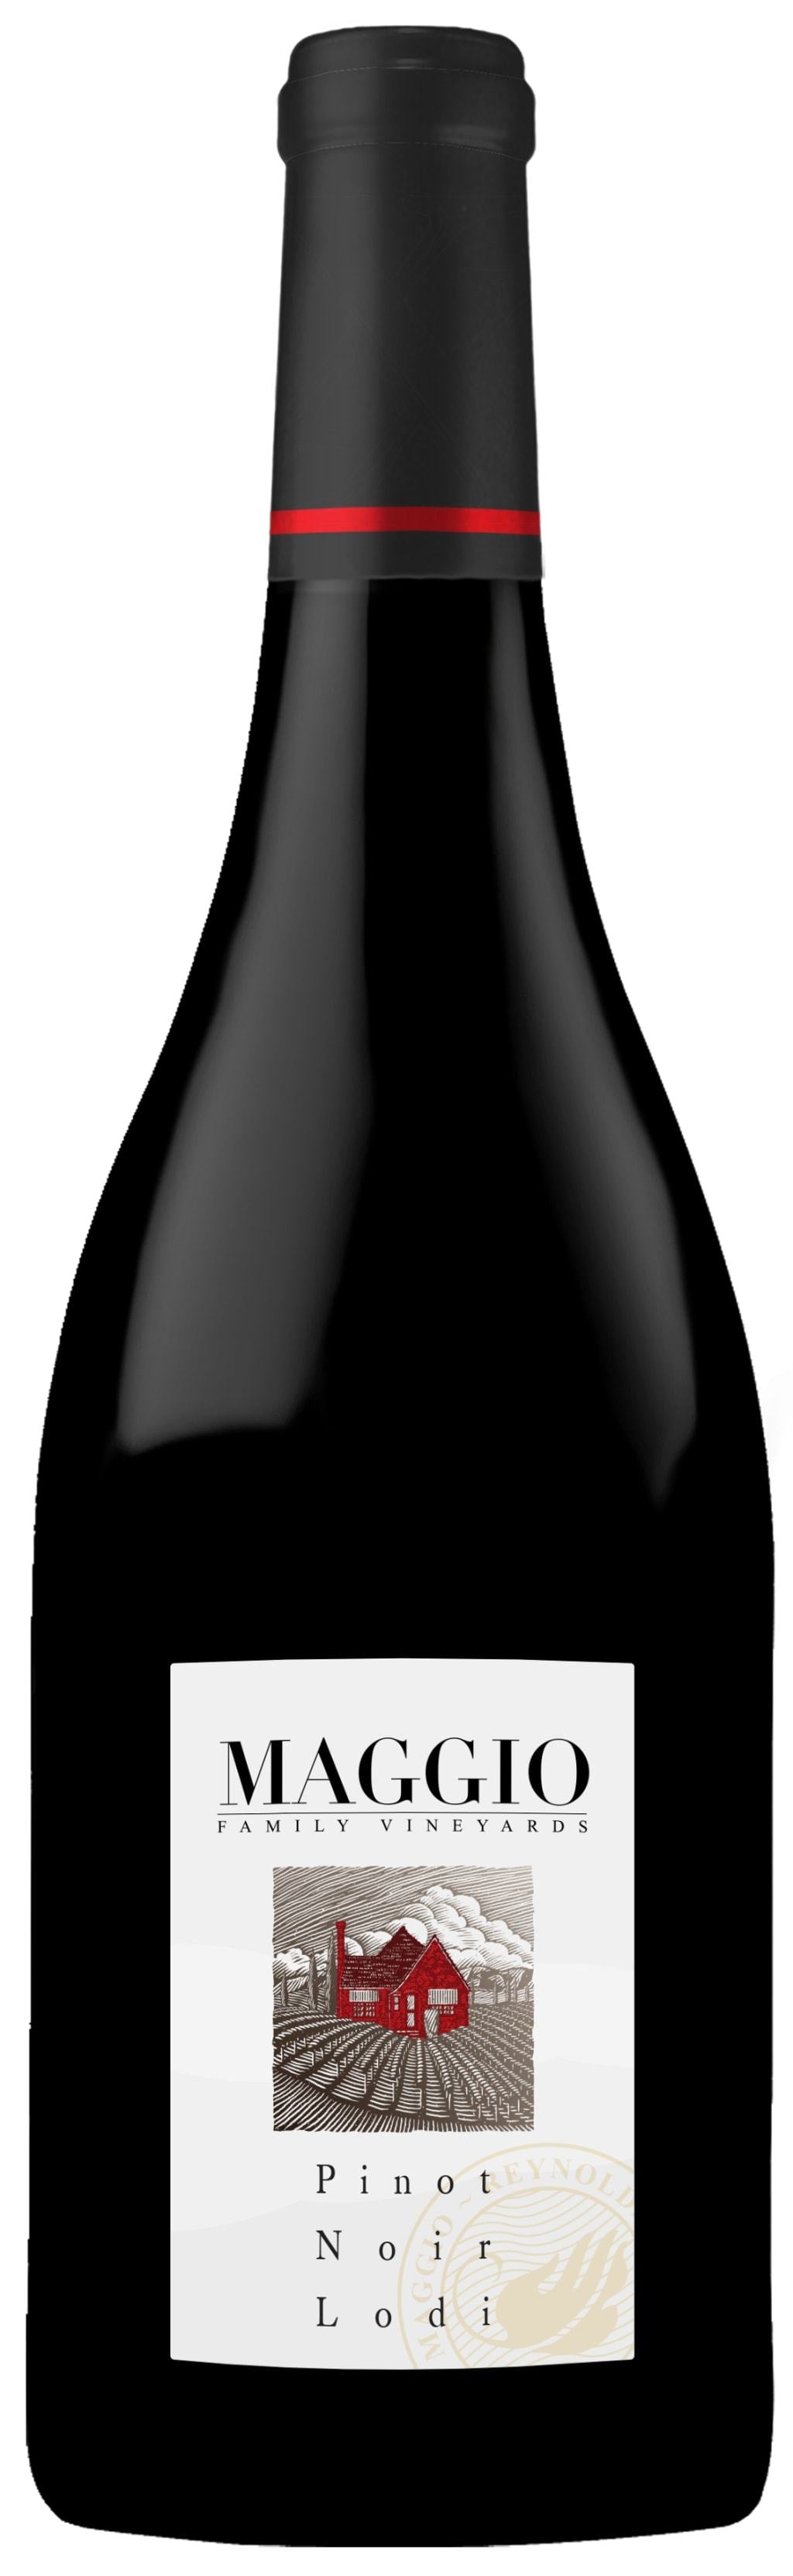 Maggio Family Vineyards Pinot Noir 2015